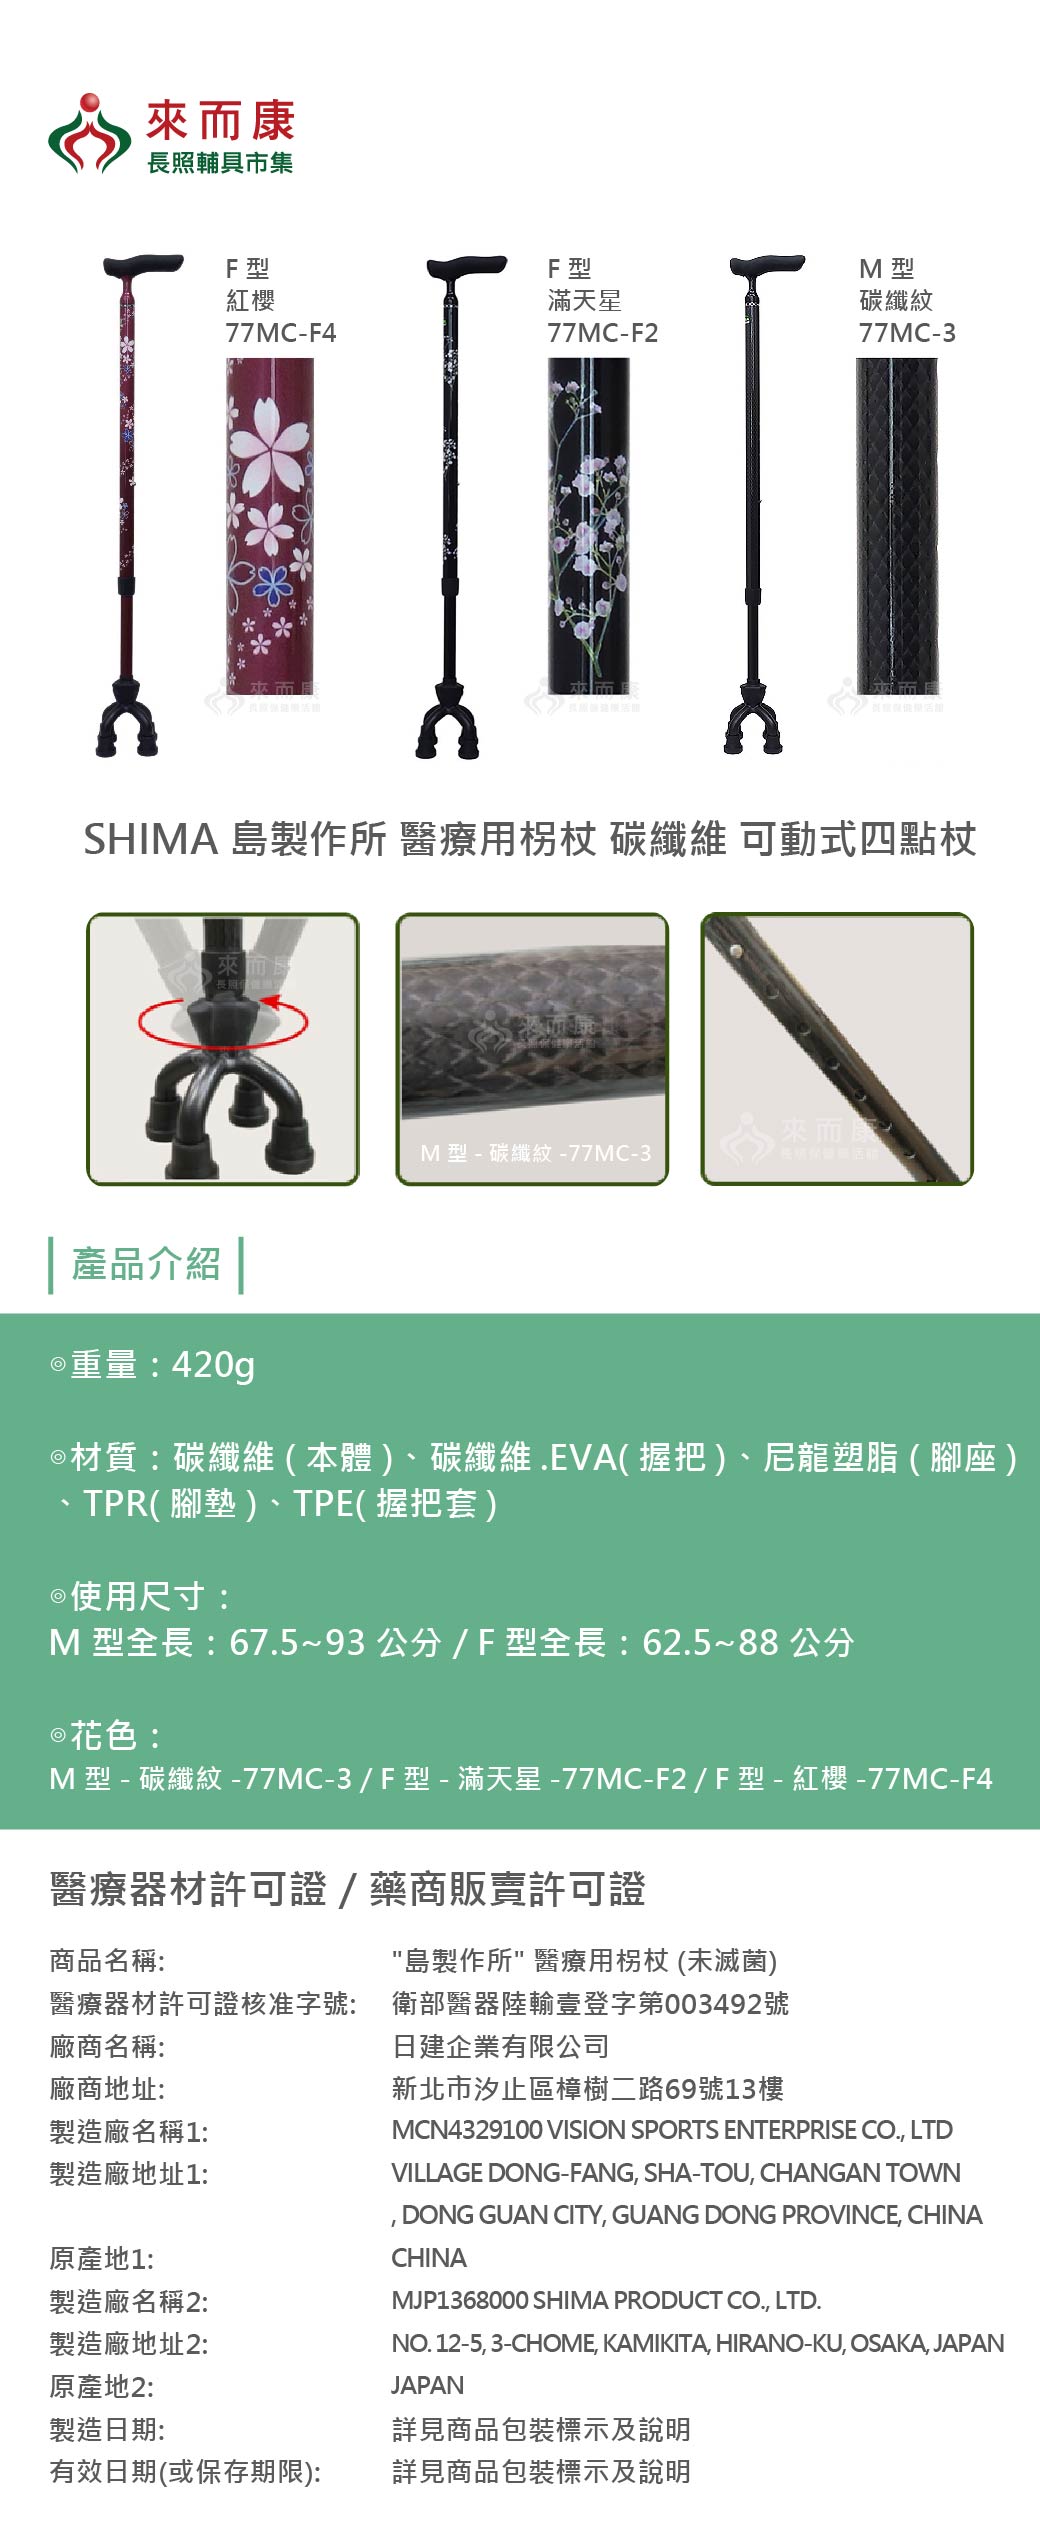 SHIMA 島製作所醫療用柺杖碳纖維可動式四點杖四腳拐